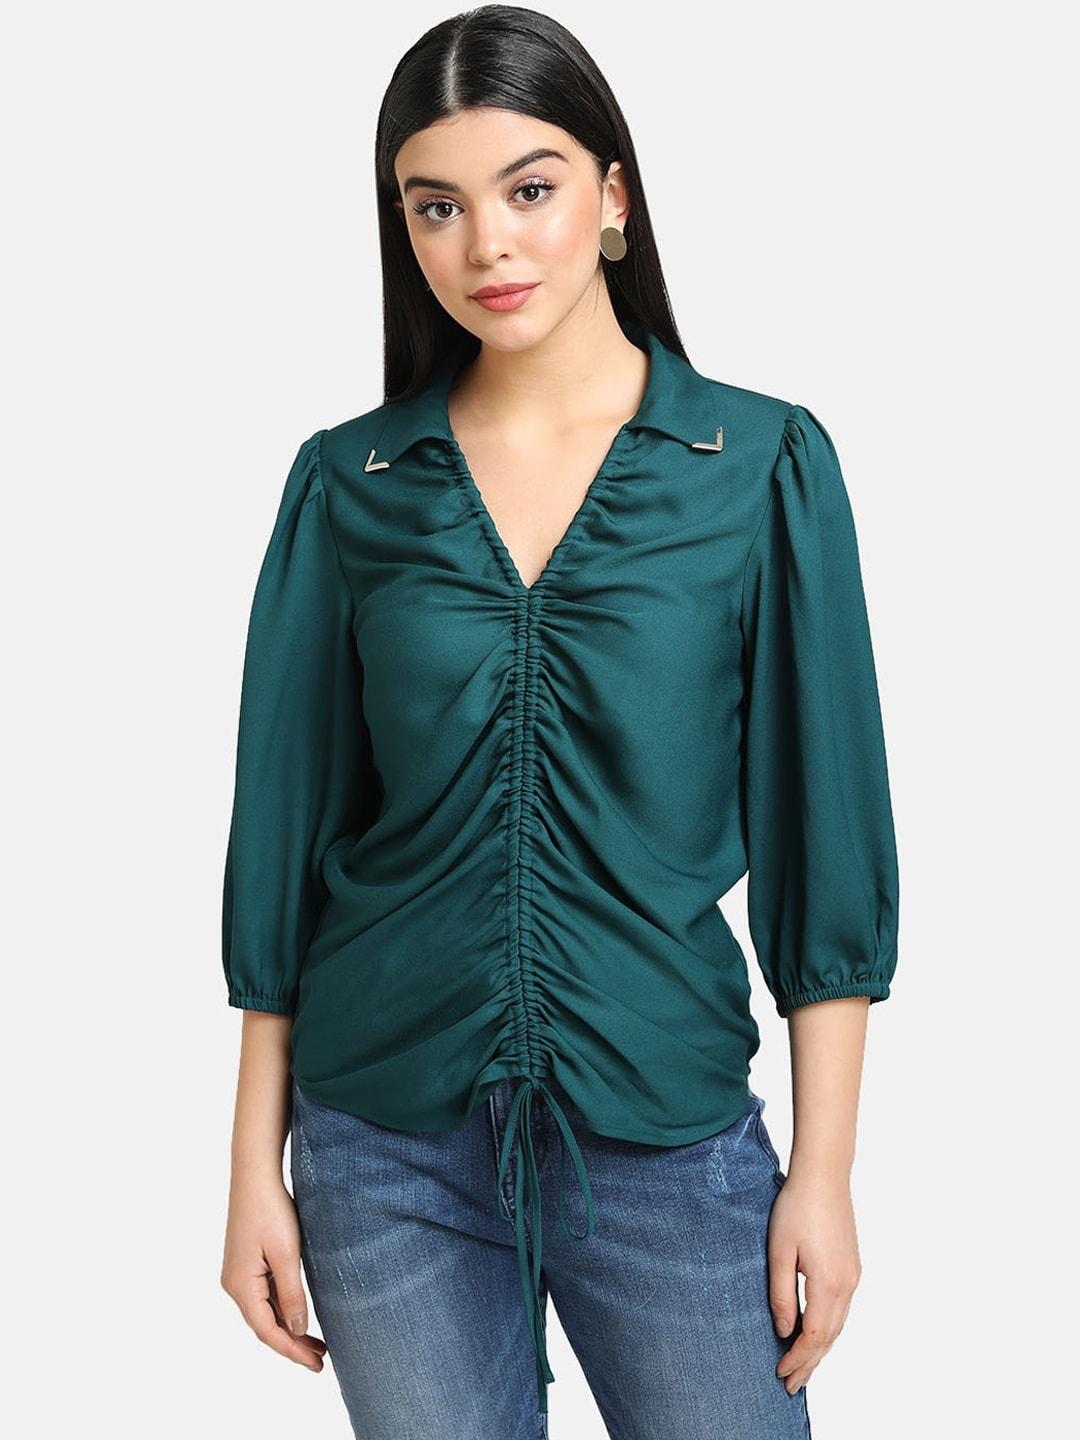 kazo-green-shirt-style-top